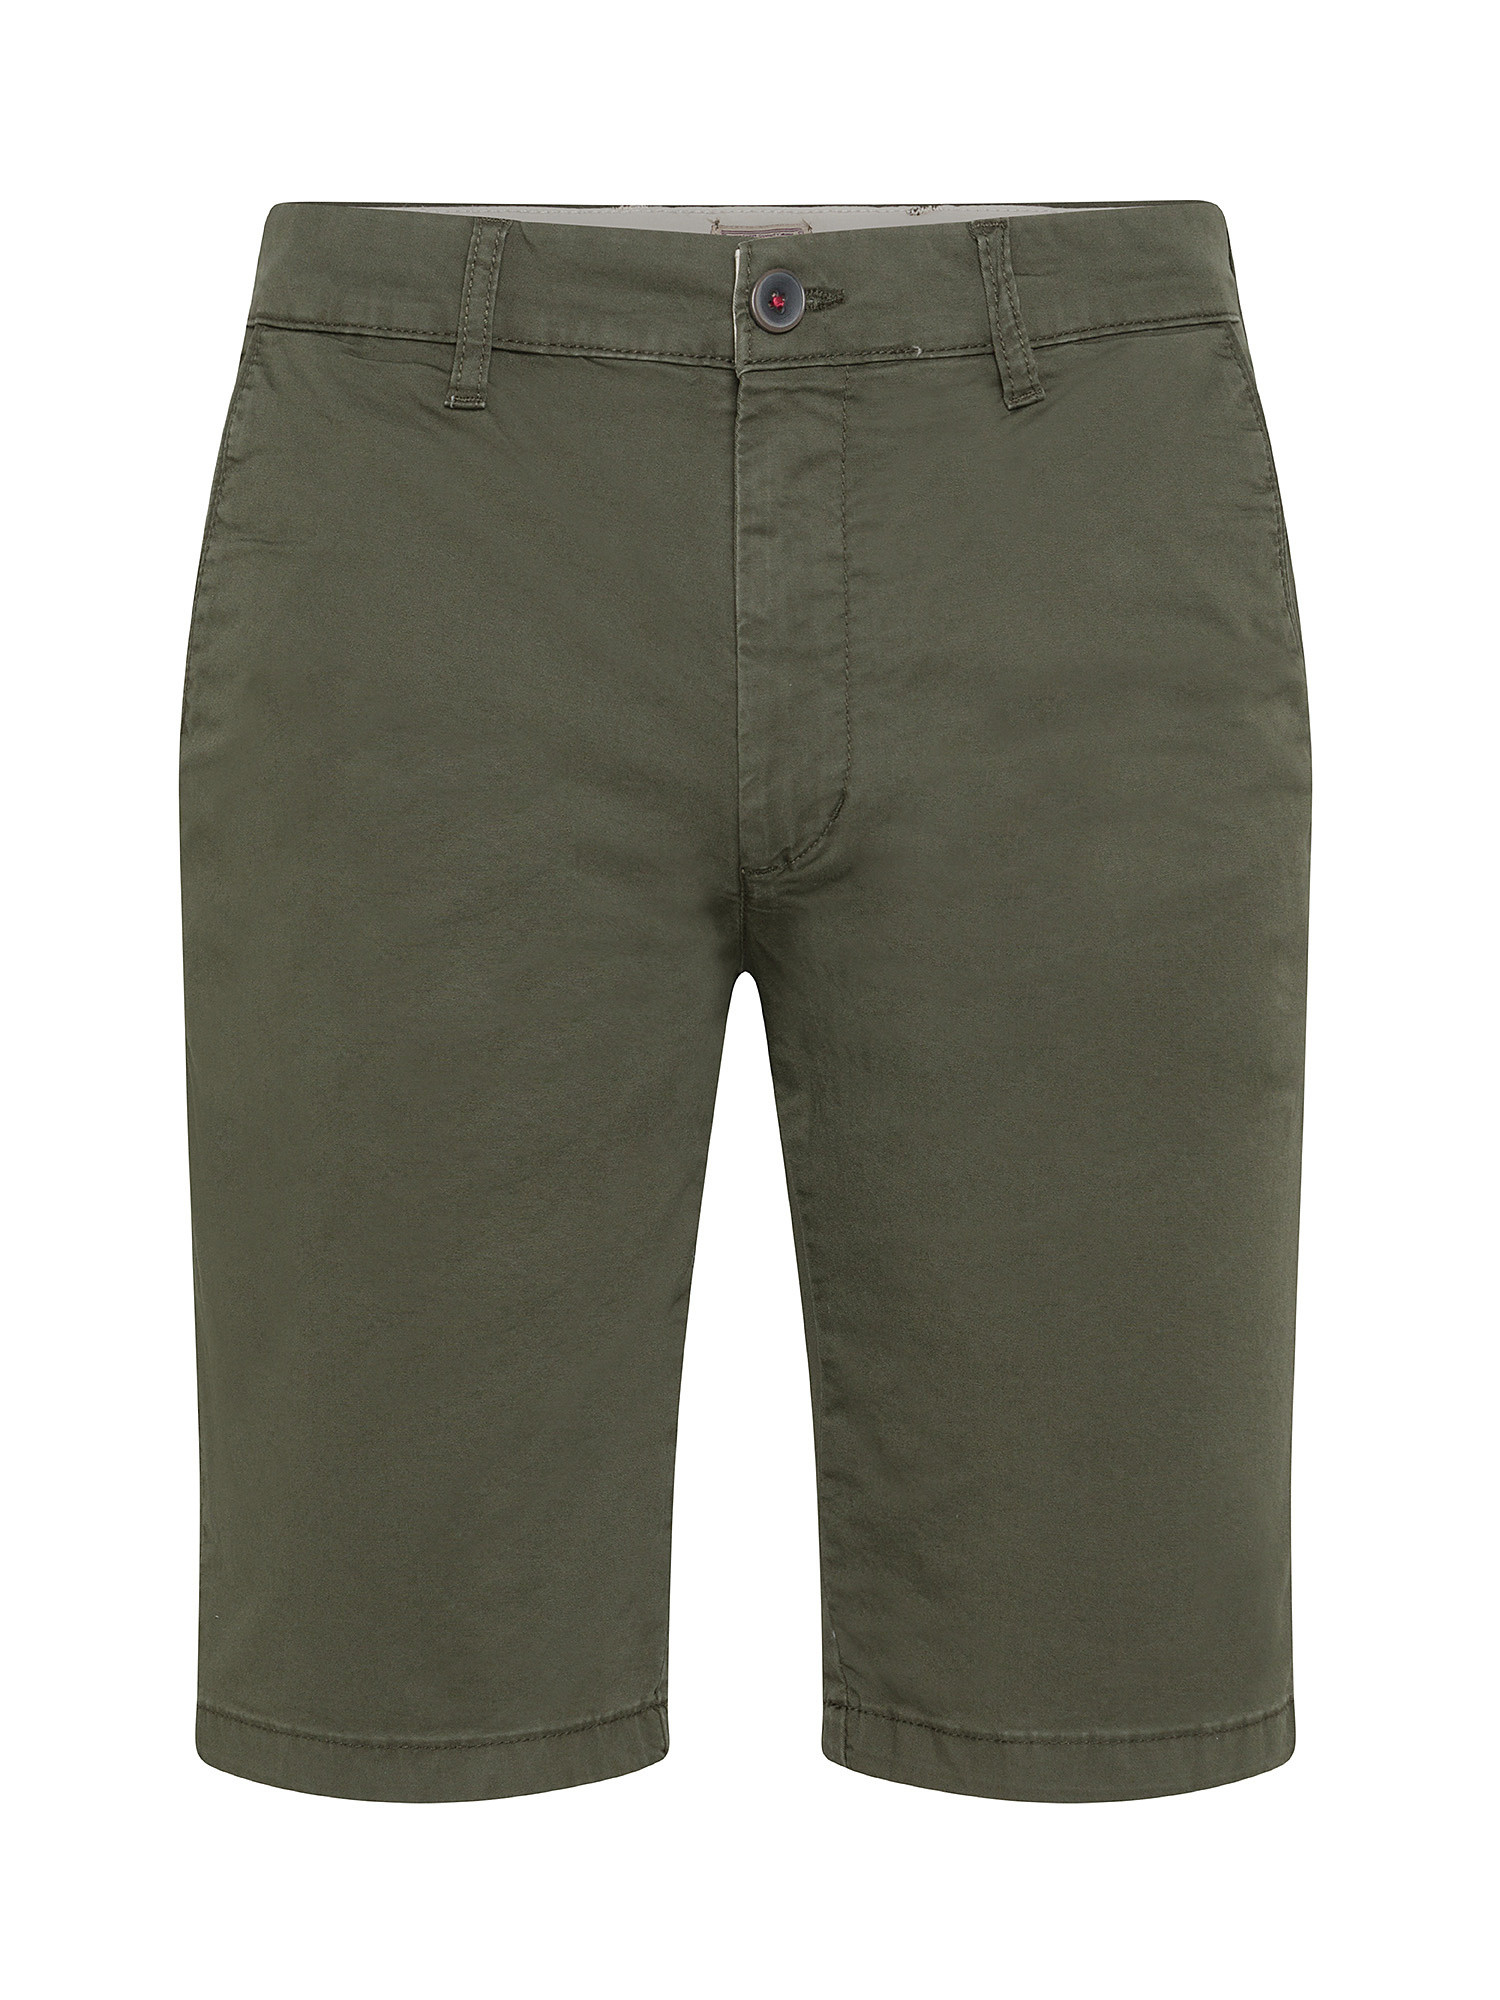 JCT - Bermuda shorts in stretch cotton, Dark Green, large image number 0